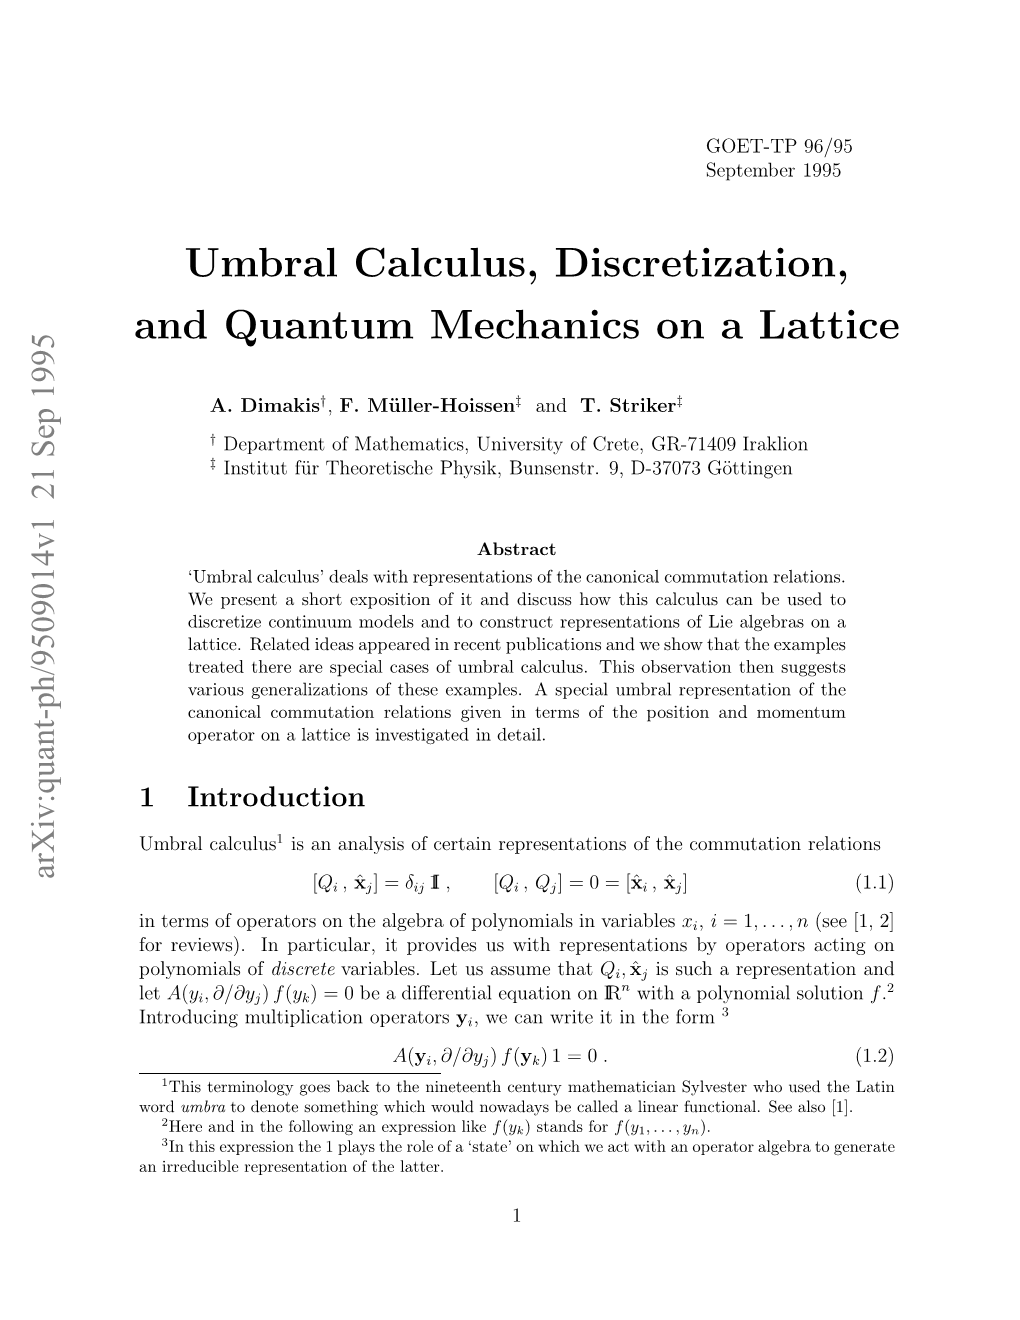 Umbral Calculus, Discretization, and Quantum Mechanics on a Lattice